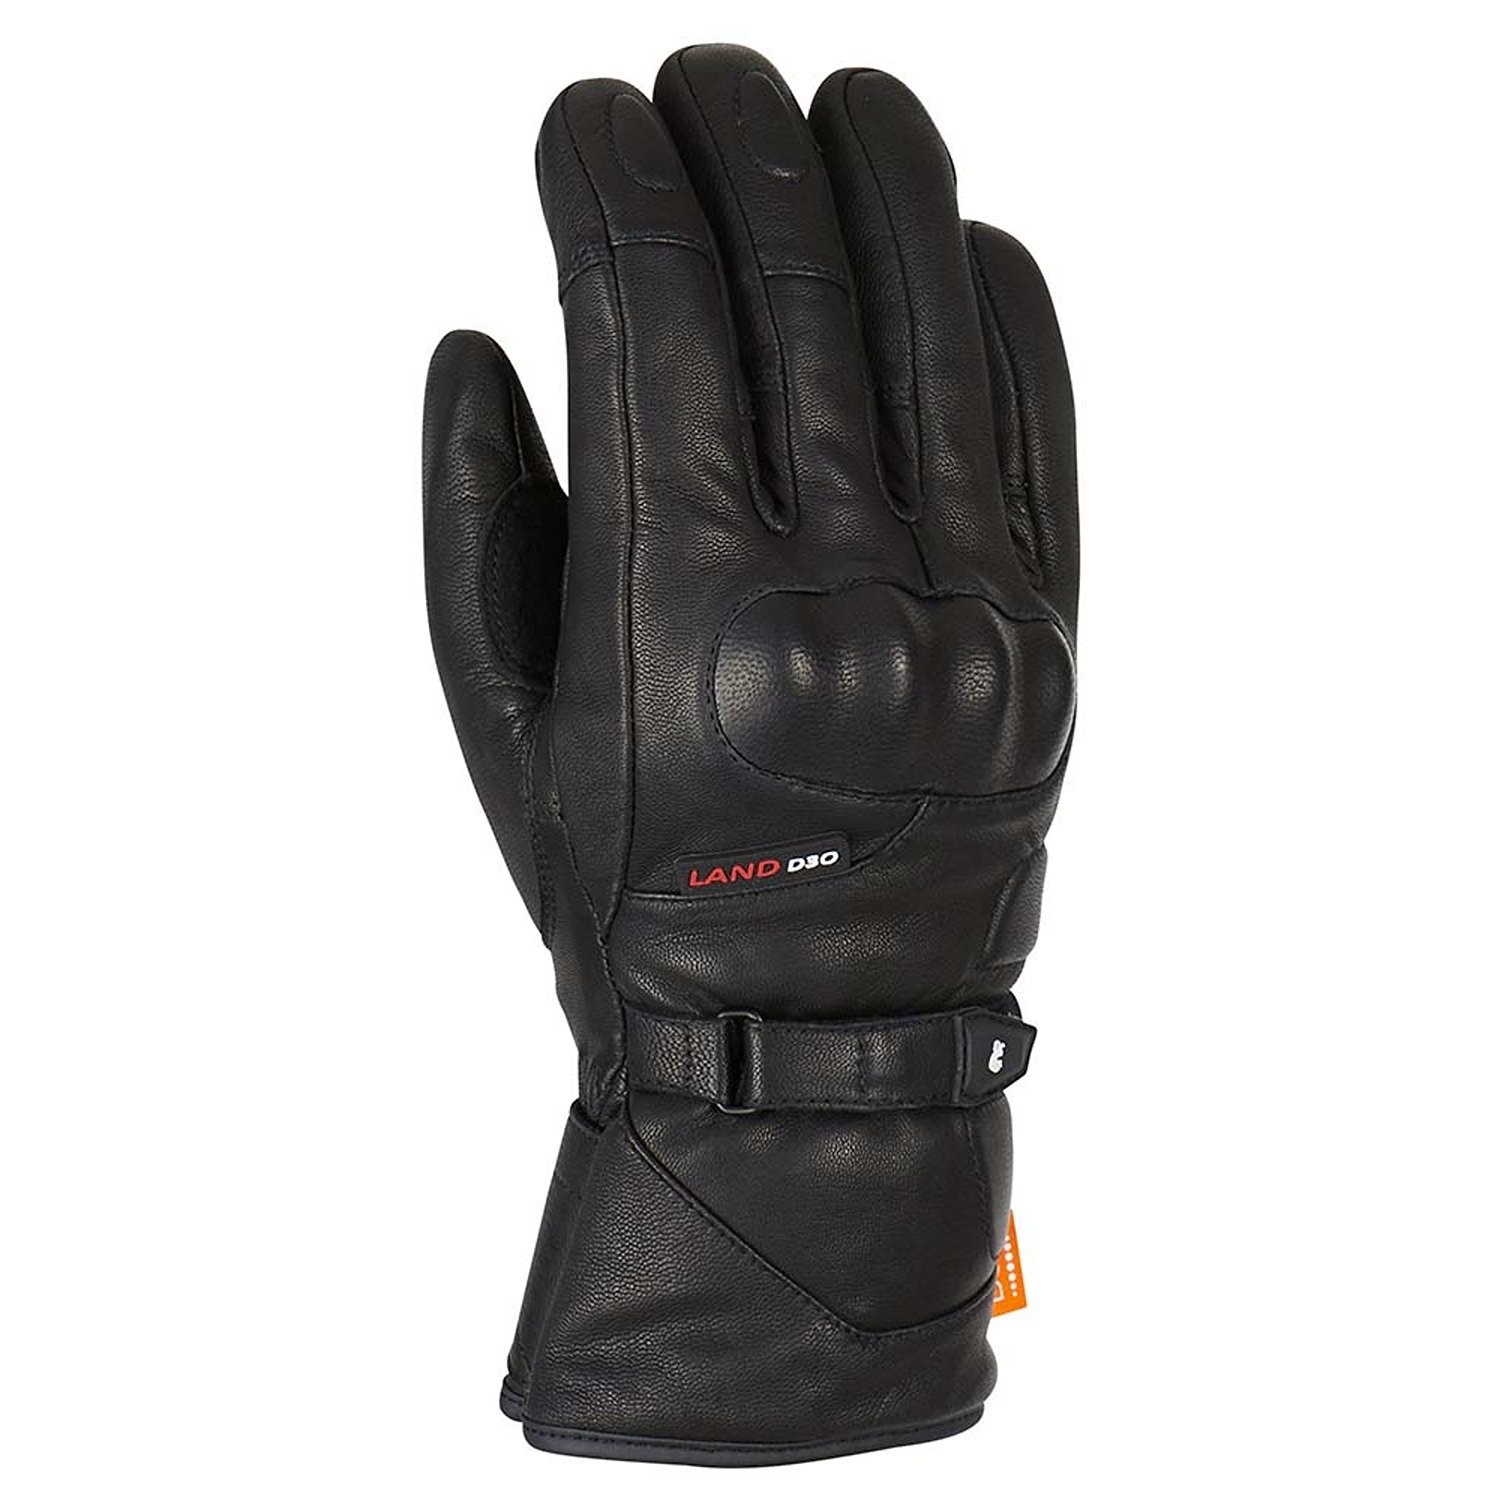 Image of Furygan Land DK D30 Gloves Black Talla S